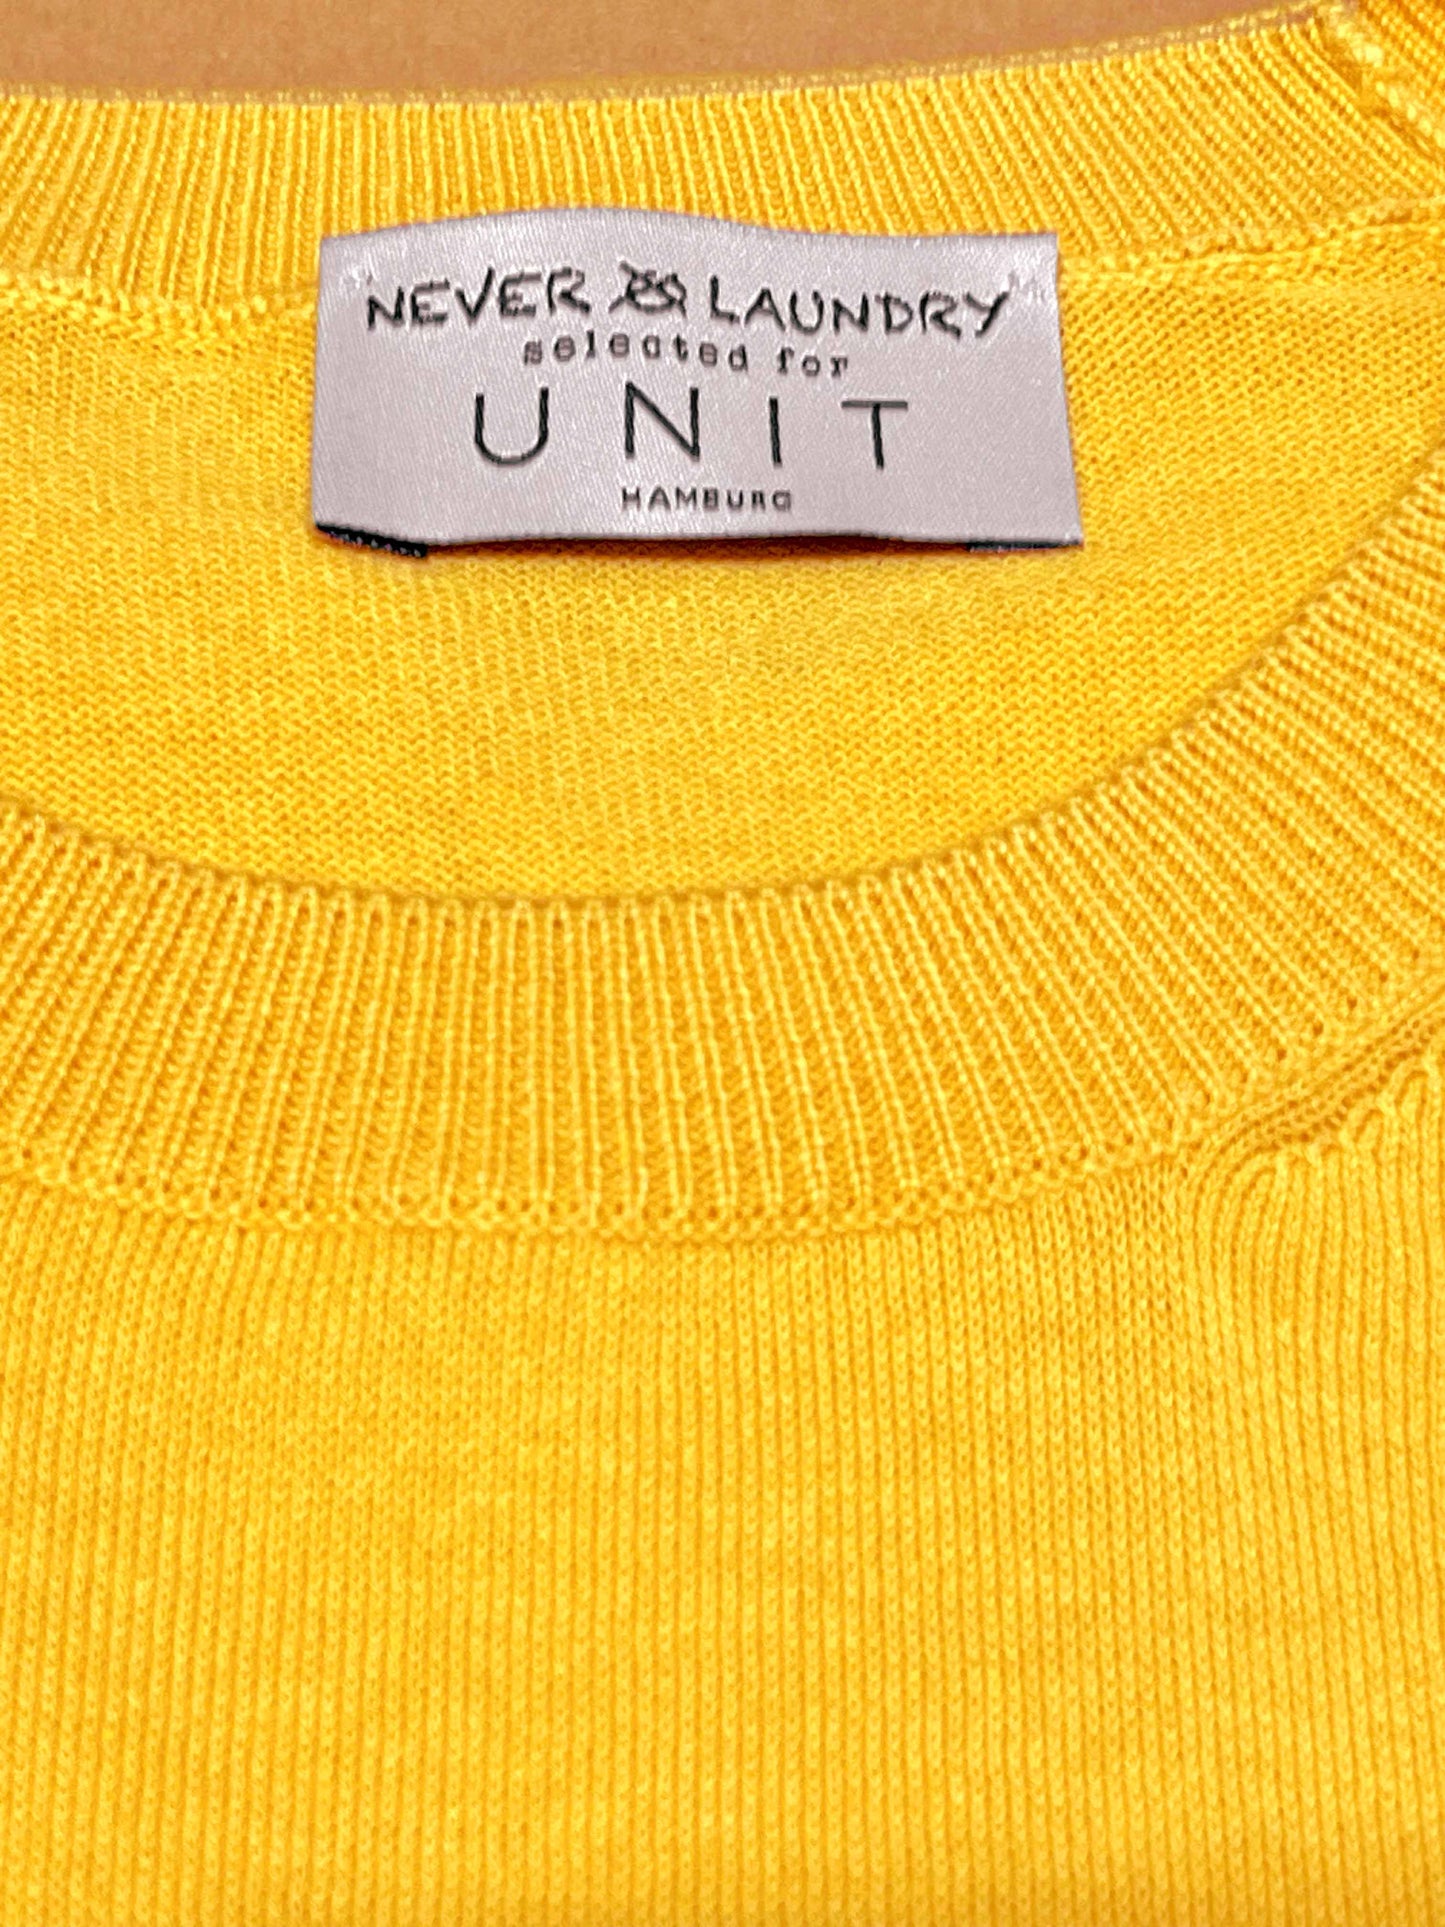 Never Laundry,T-Shirt,Never Laundry, Organic Cotton T-Shirt, Raglan Schulter, sonnenblumengelb,UNIT Hamburg